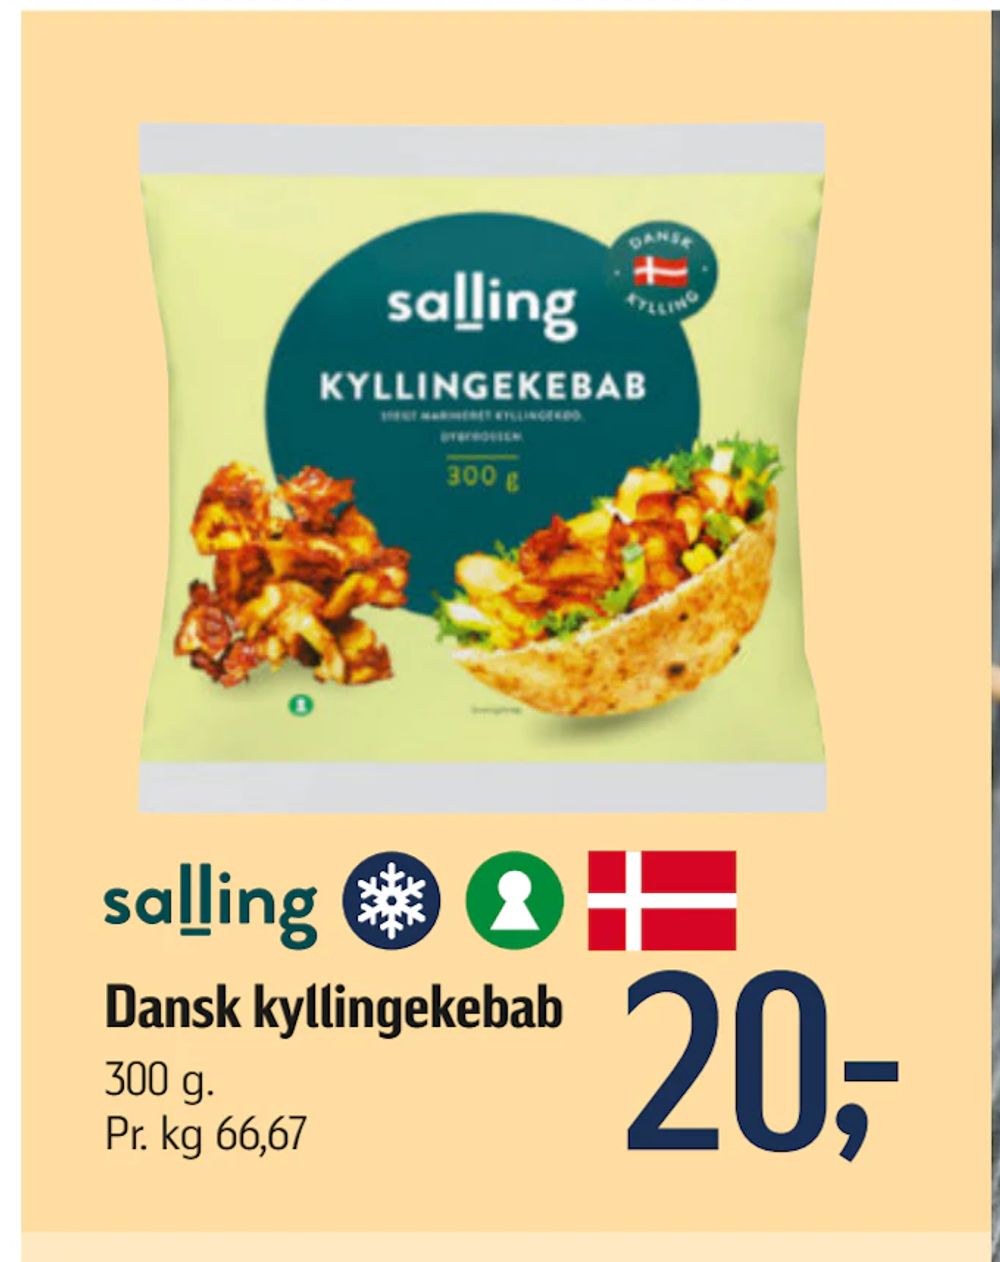 Tilbud på Dansk kyllingekebab fra føtex til 20 kr.